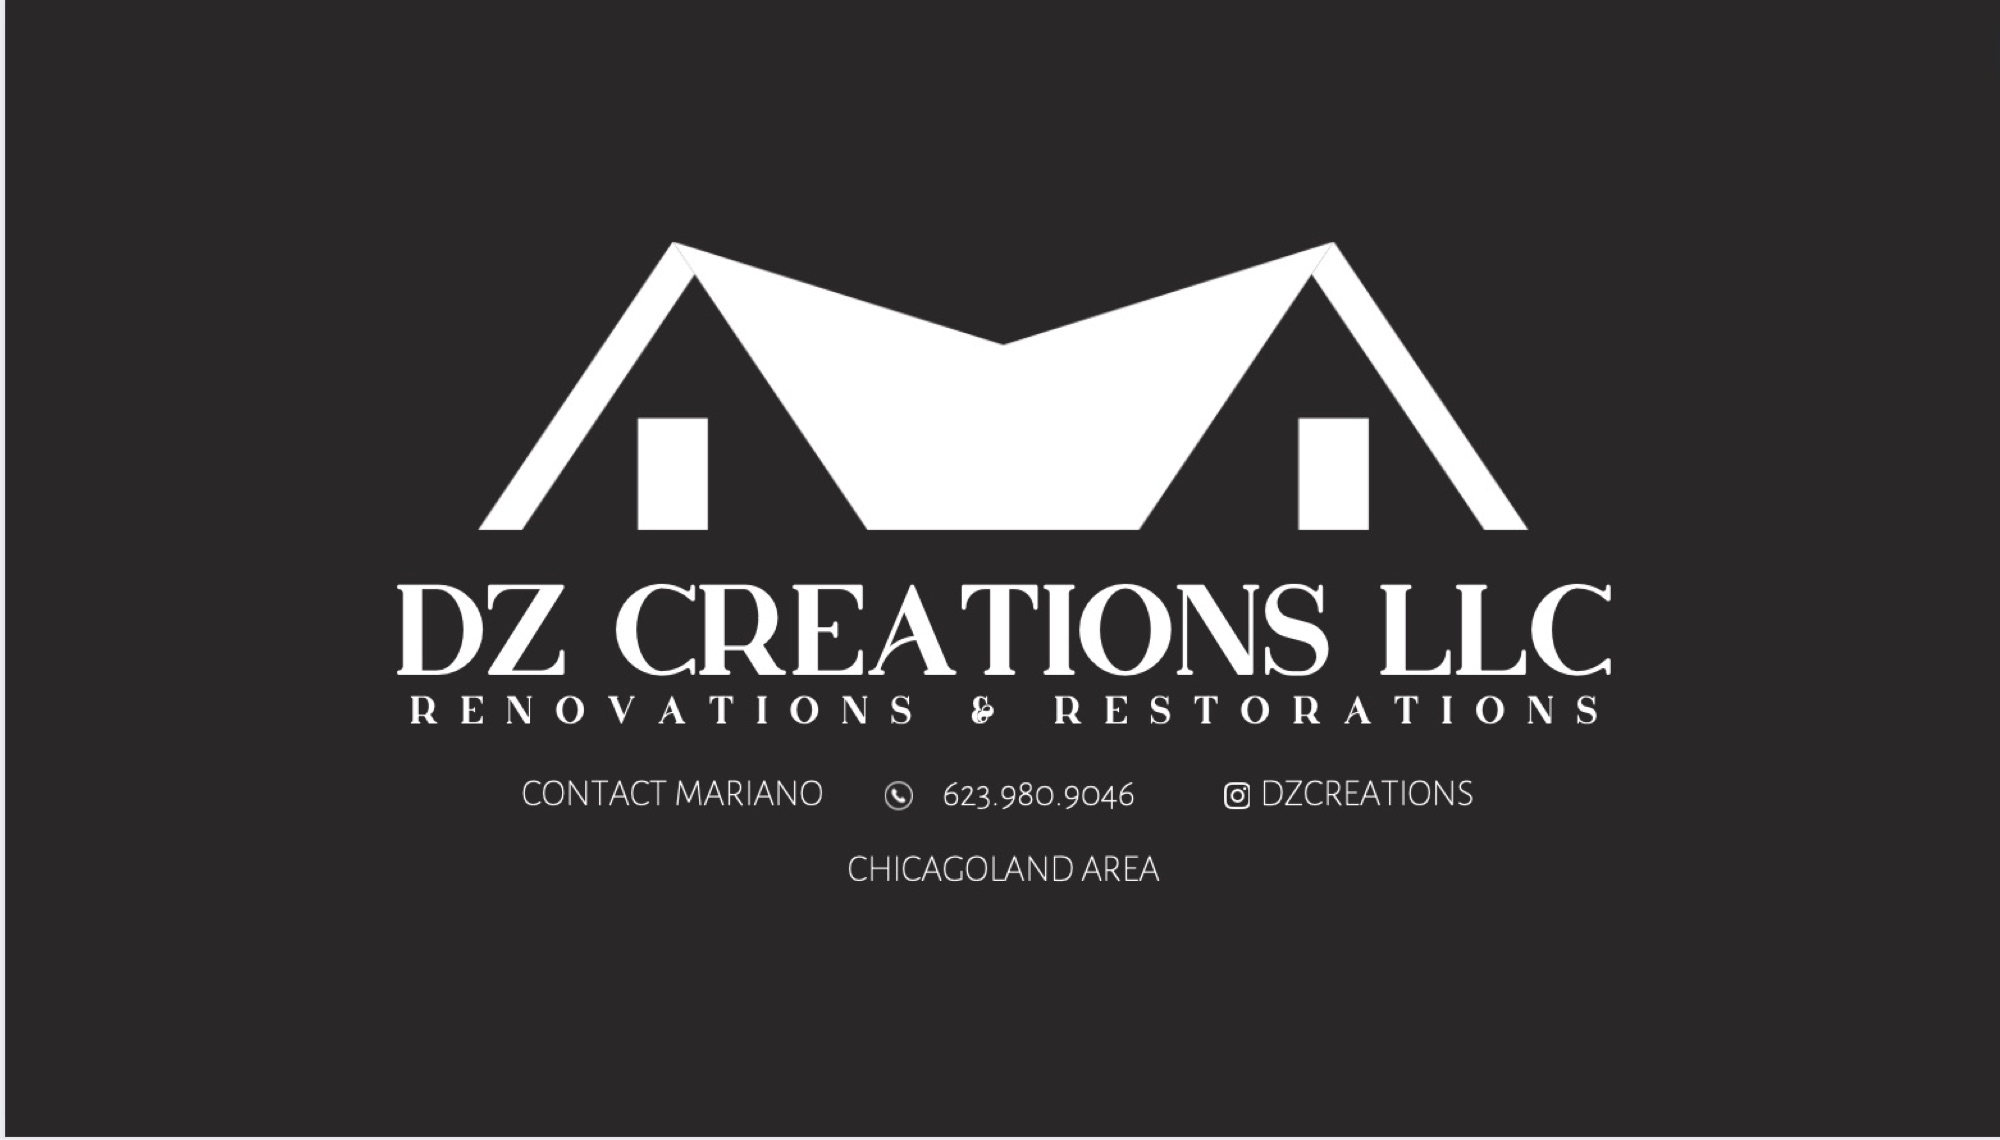 DZ Creations Renovations & Restorations Logo